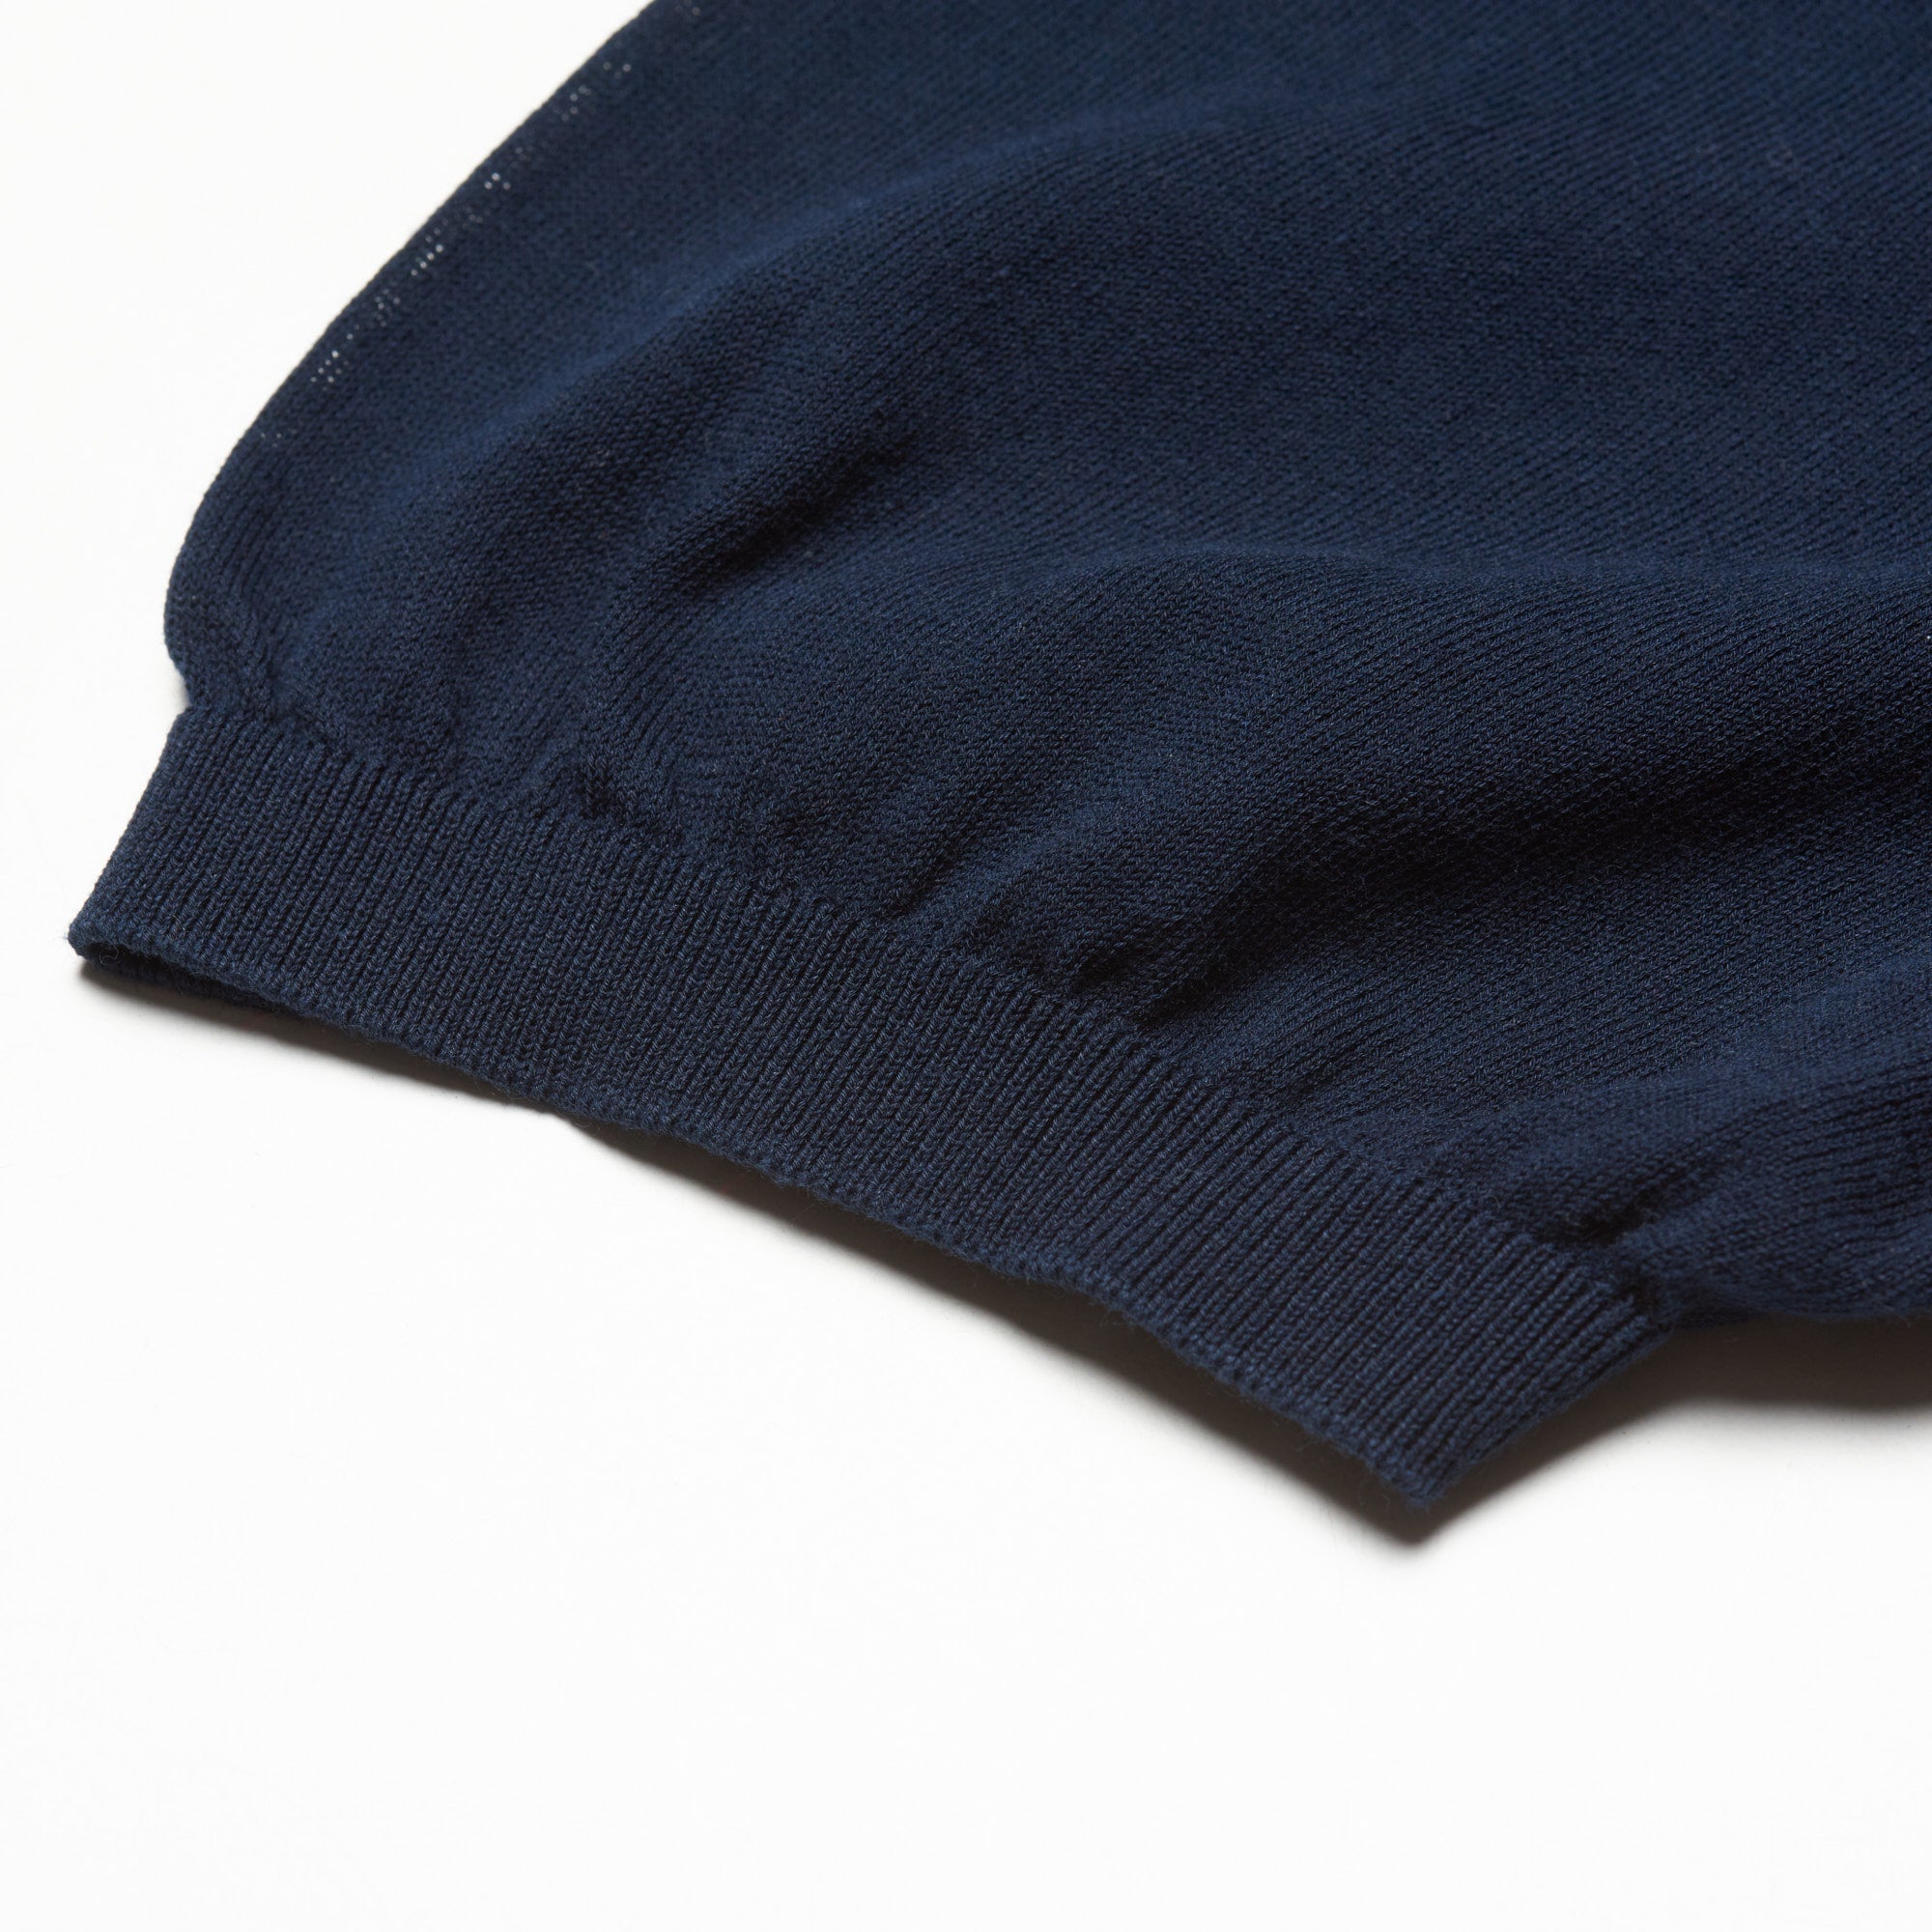 MALO Navy Blue Cotton Knit Short Sleeve T-Shirt EU 54 US L Slim Fit MALO